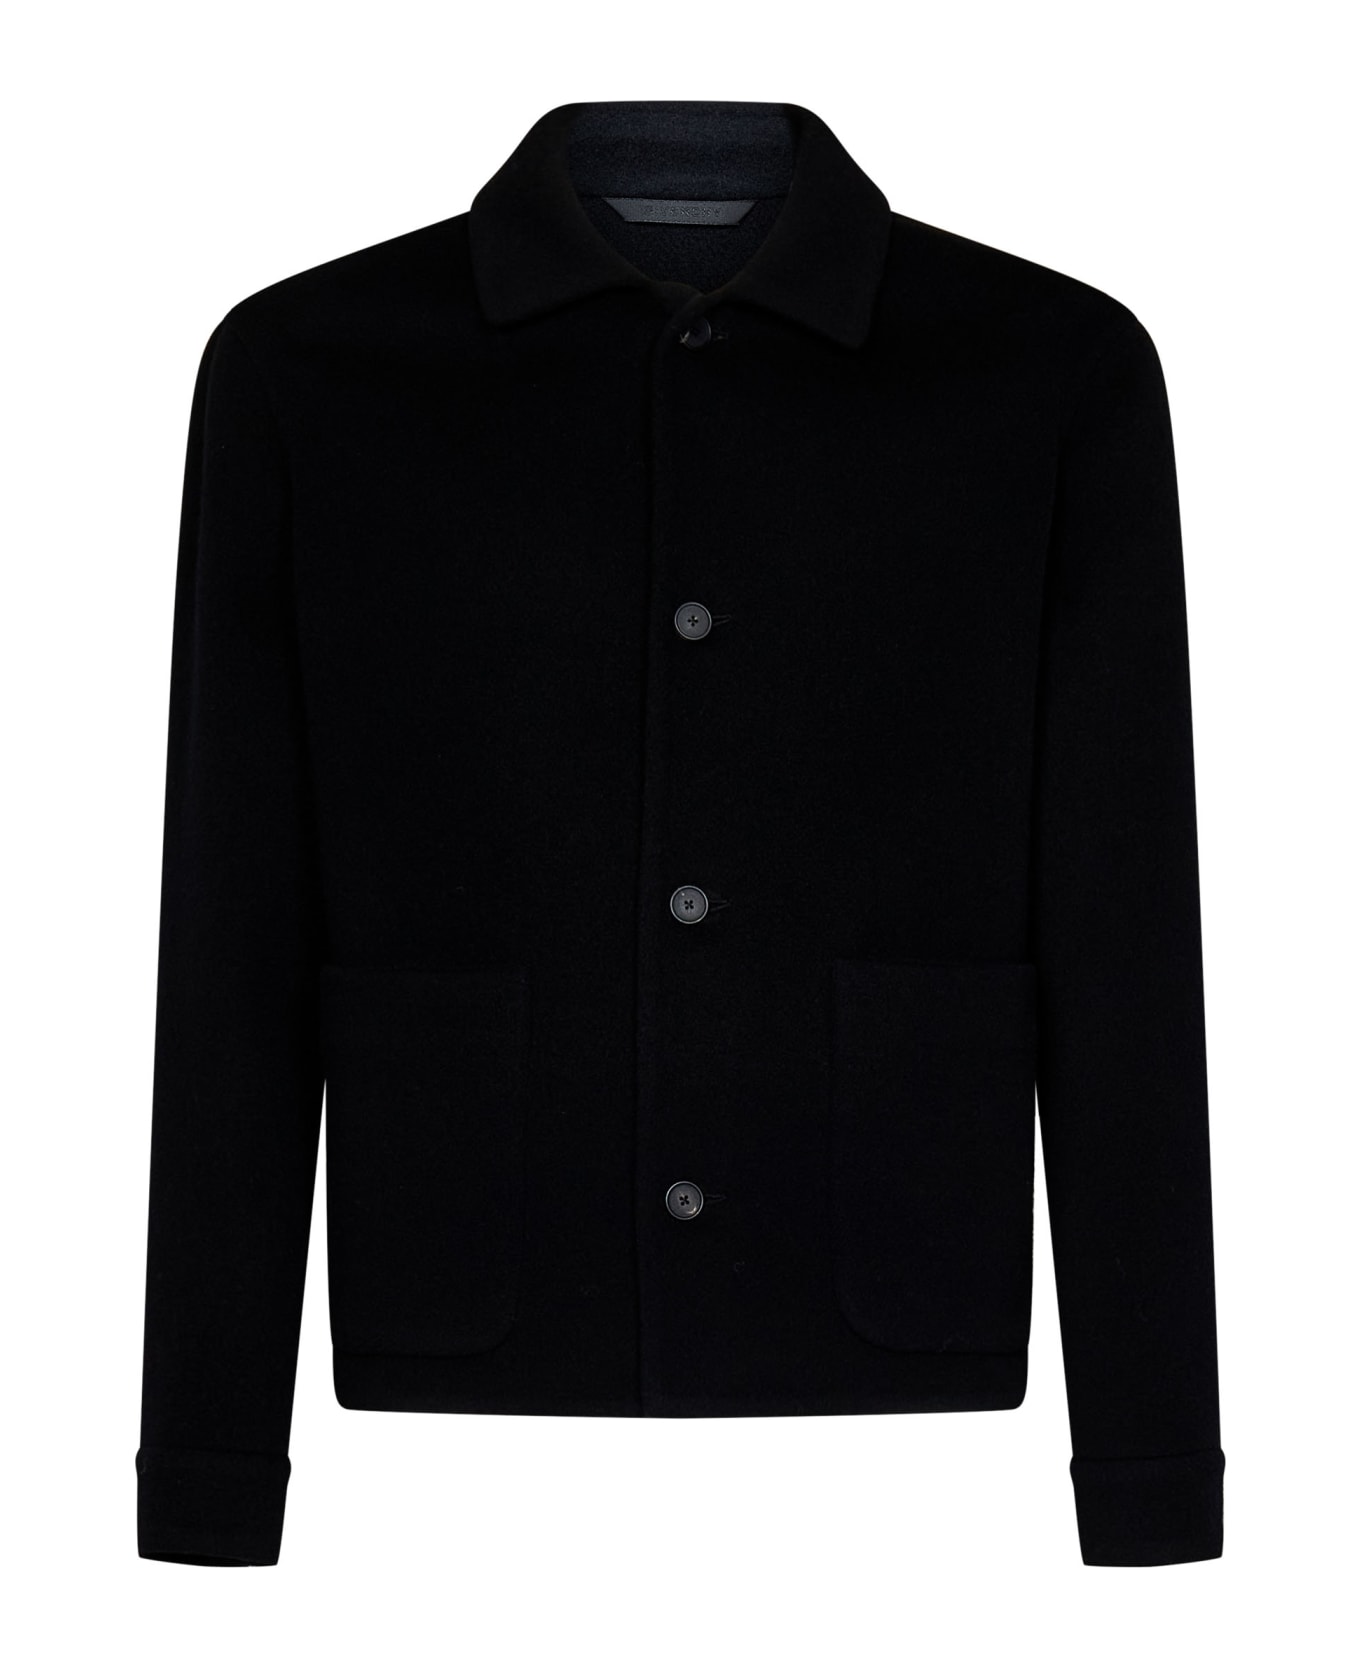 Givenchy Wool And Cashmere Jacket - black ジャケット